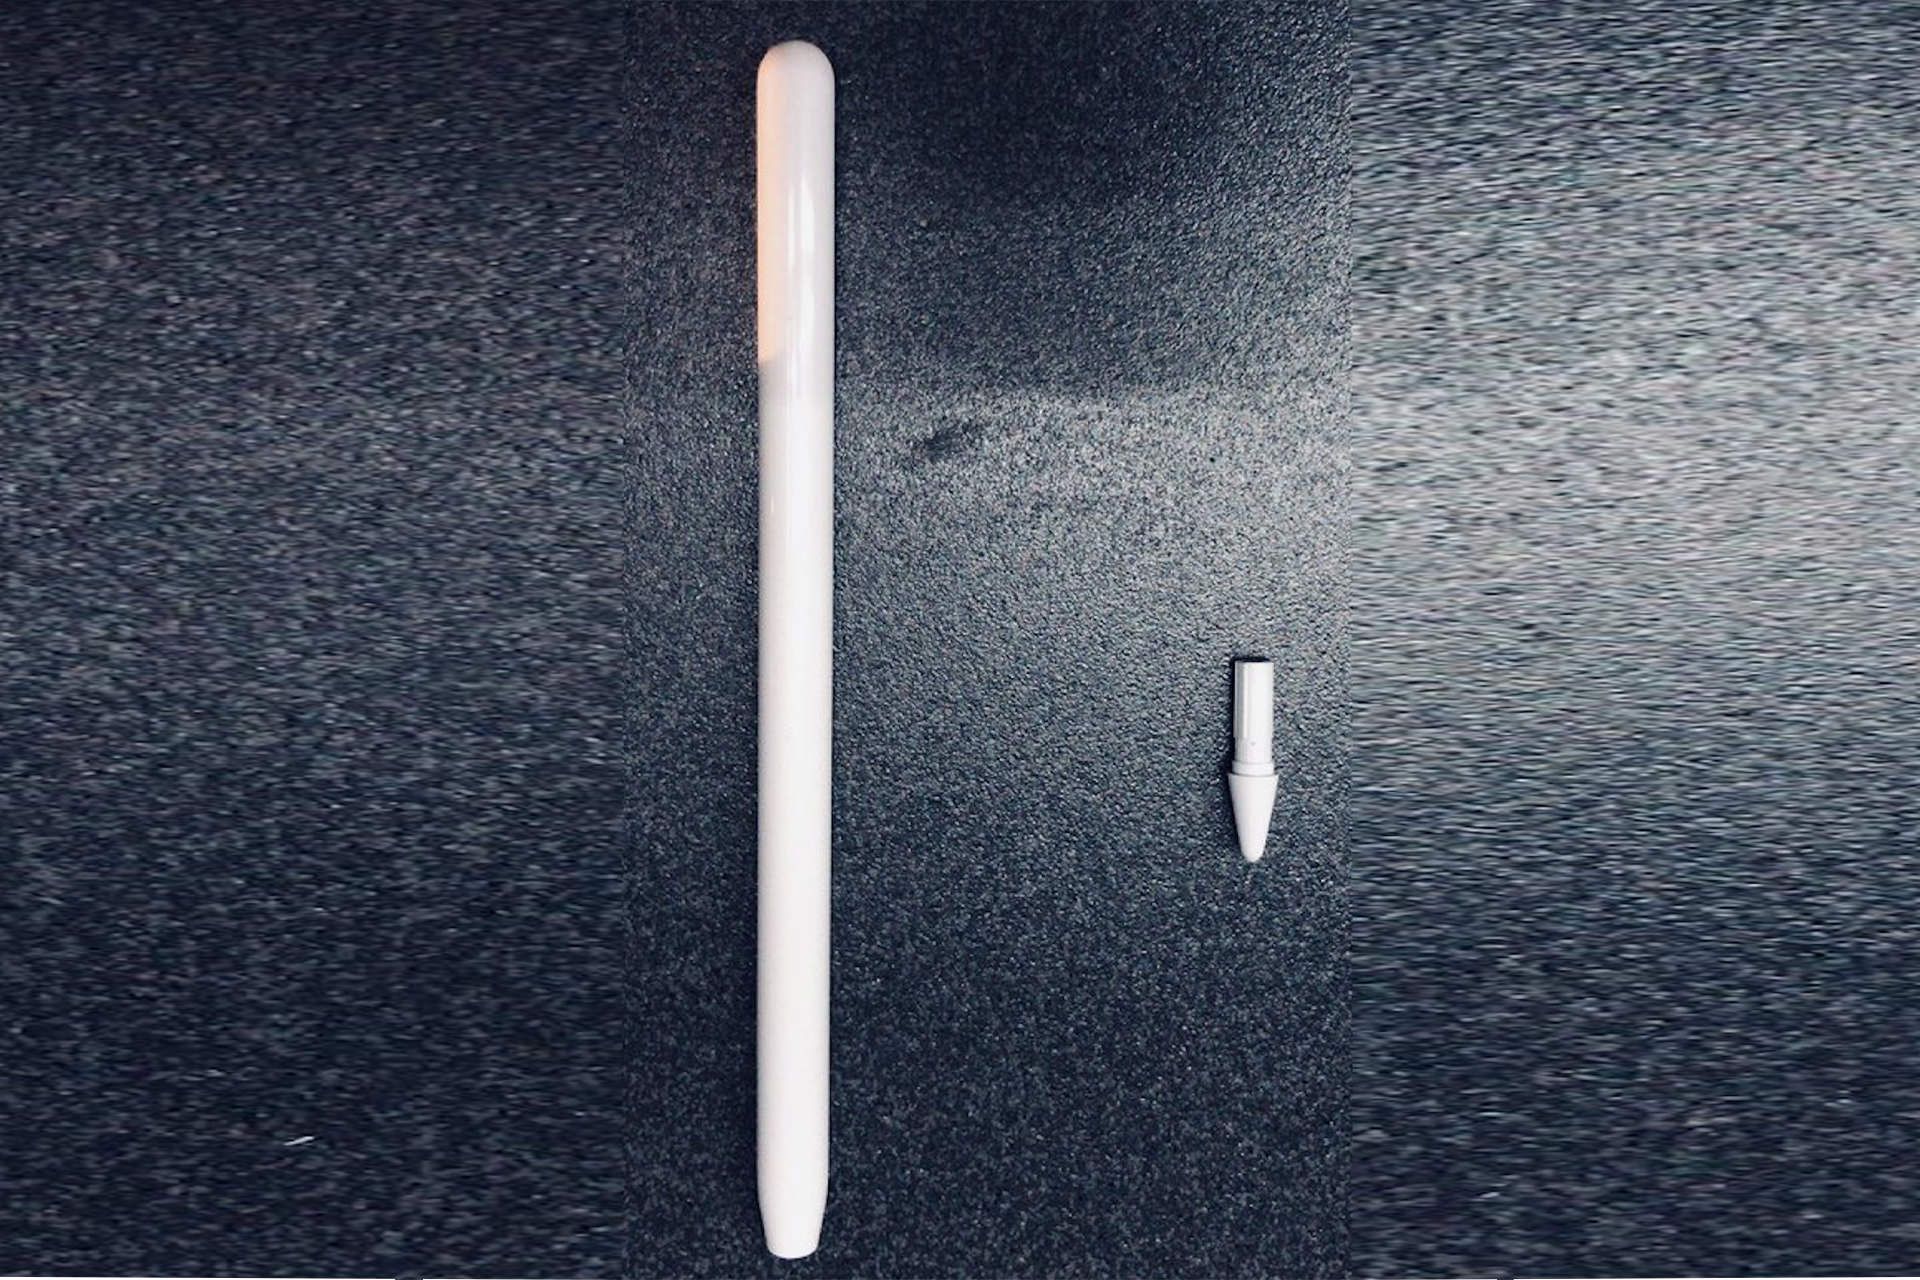 مرجع متخصصين ايران تصوير منتسب به نسل سوم اپل پنسل / Apple Pencil در دنياي واقعي